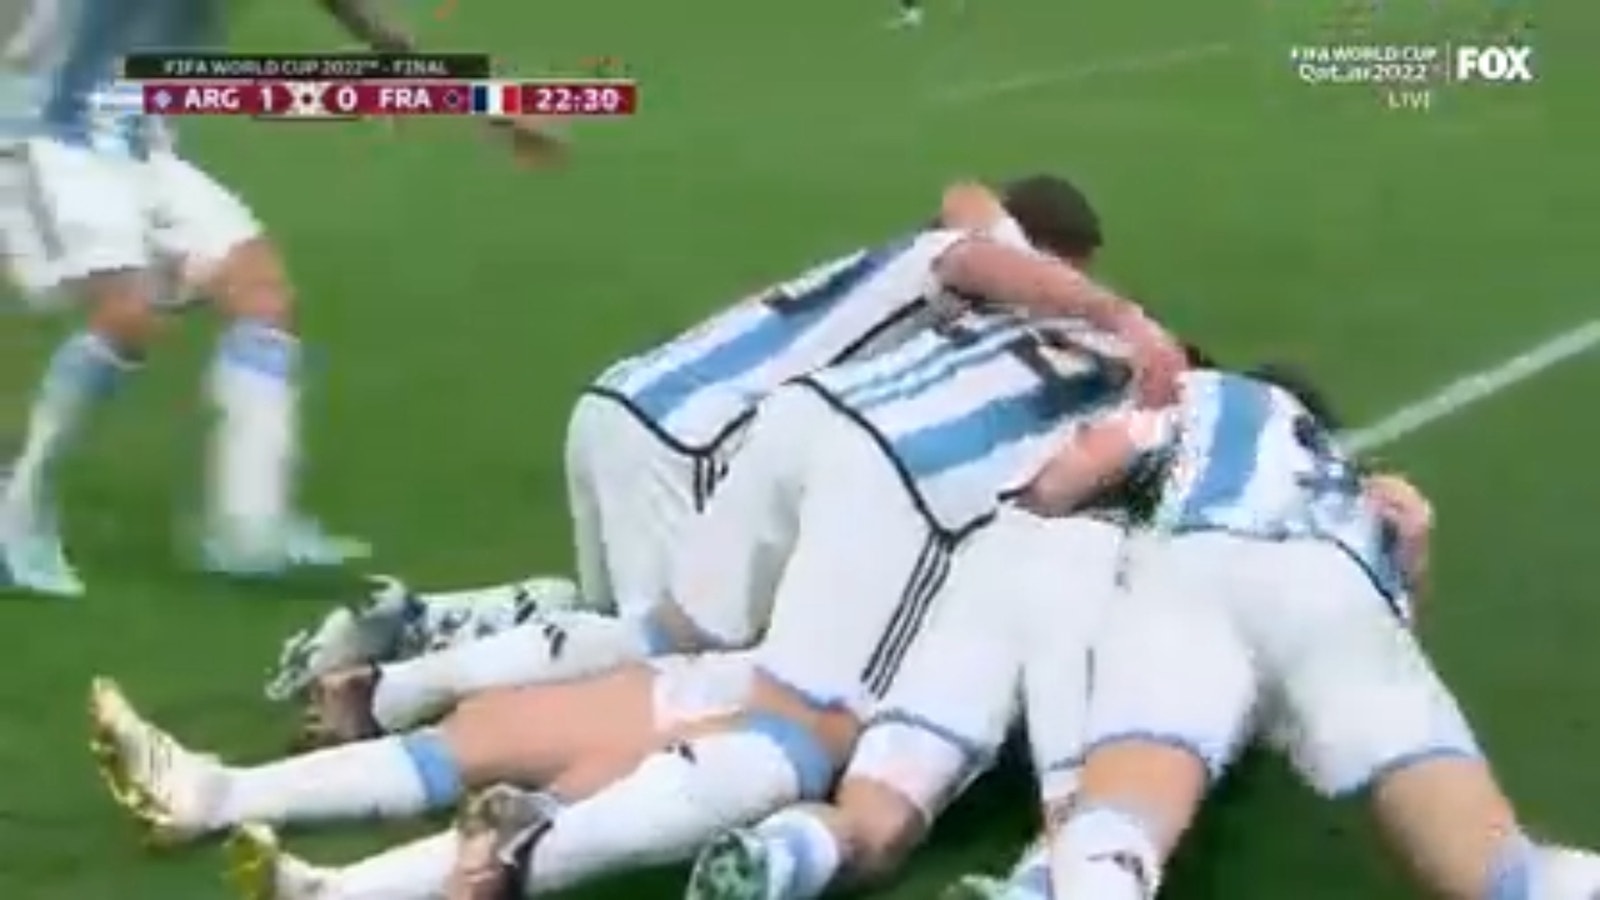 Argentina's Lionel Messi scores goal vs. France in 21'